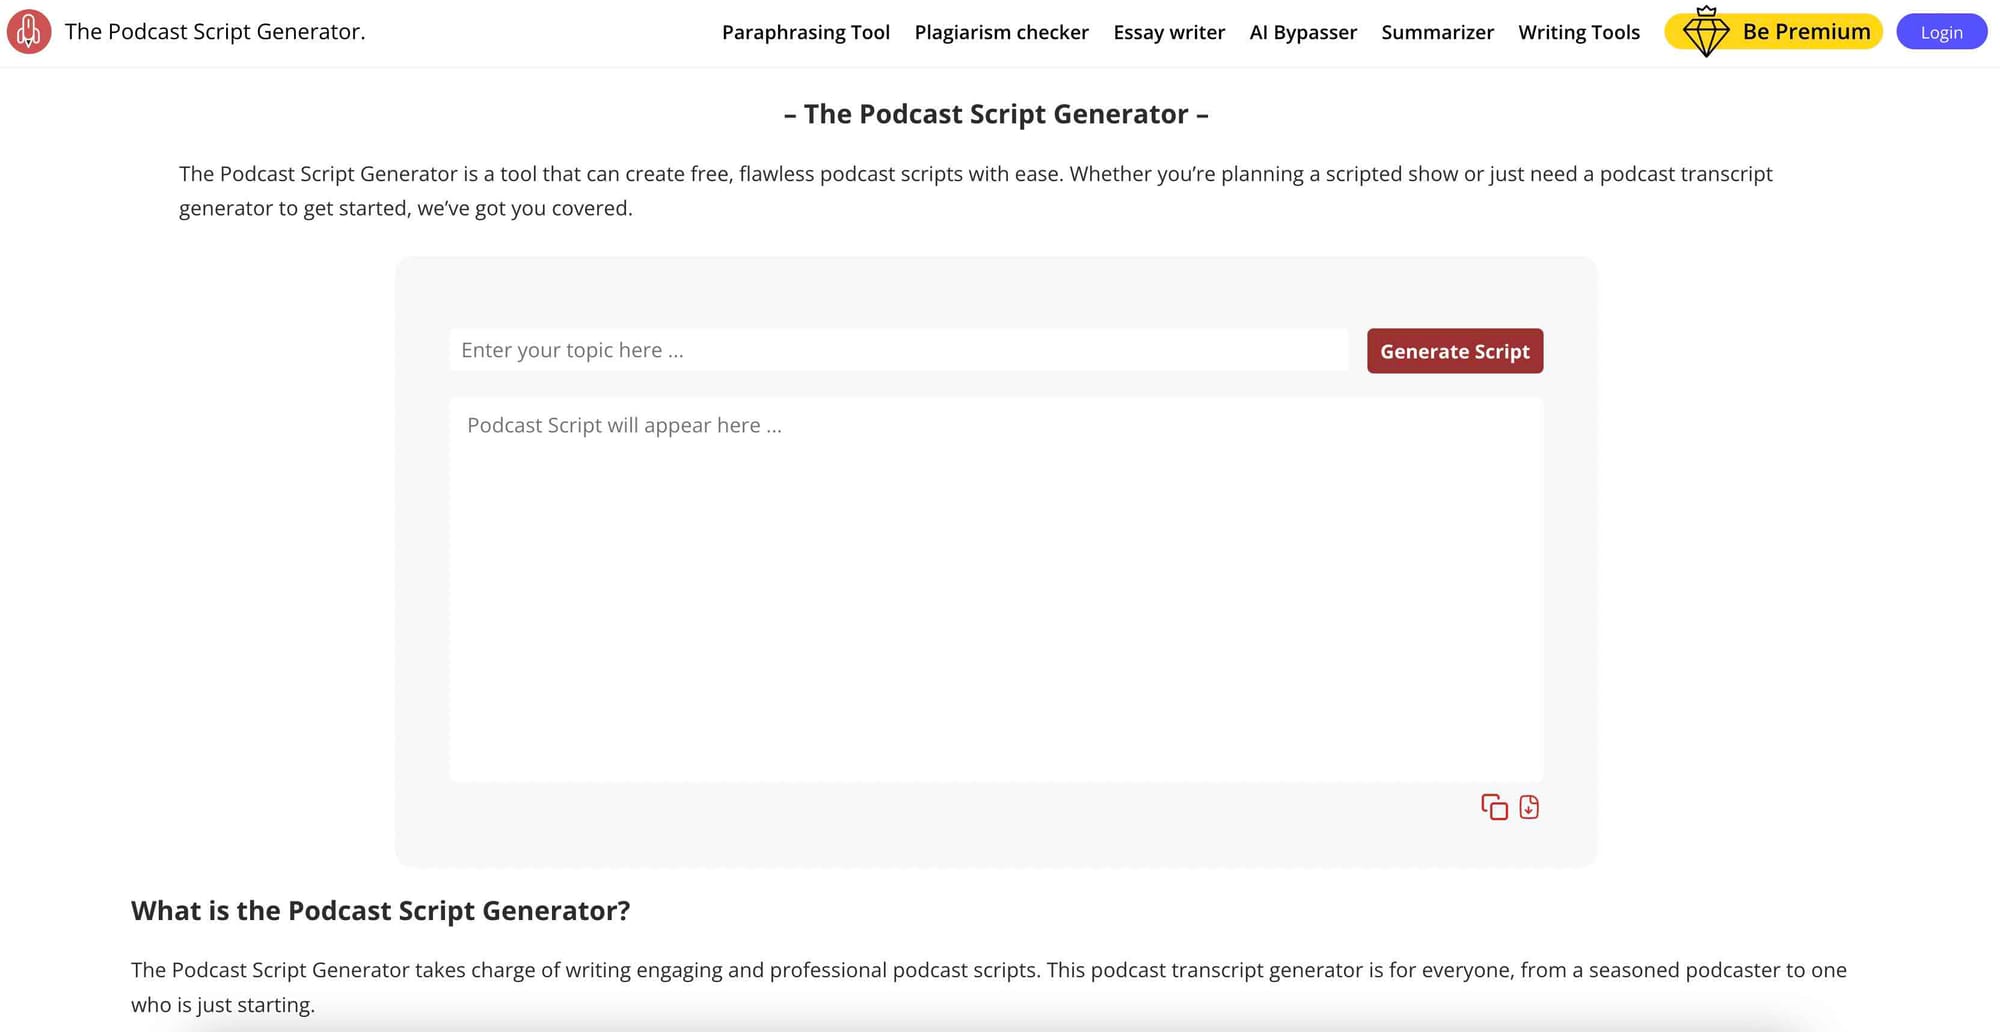 The Podcast Script Generator's website homepage.